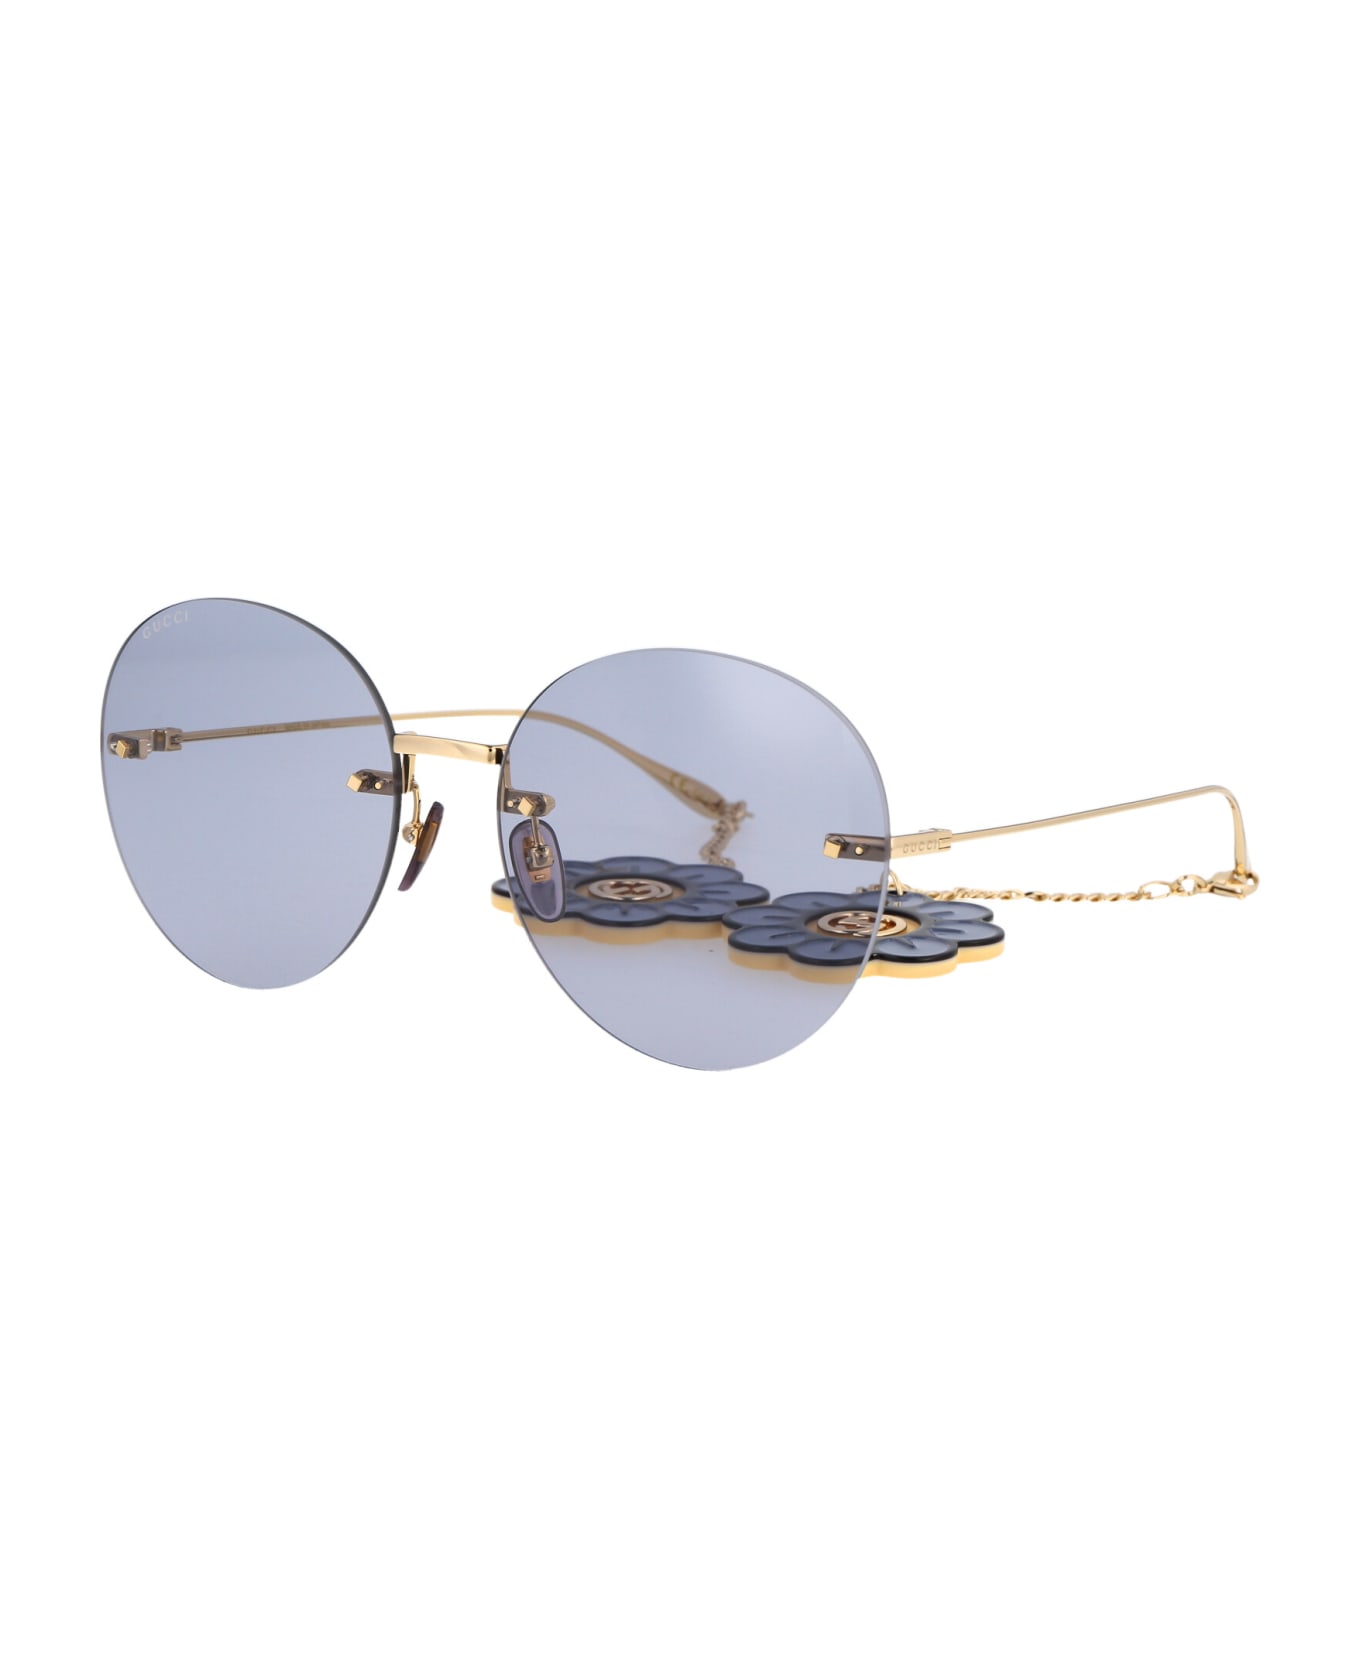 Gucci Eyewear Gg1149s Sunglasses - 006 GOLD GOLD VIOLET サングラス